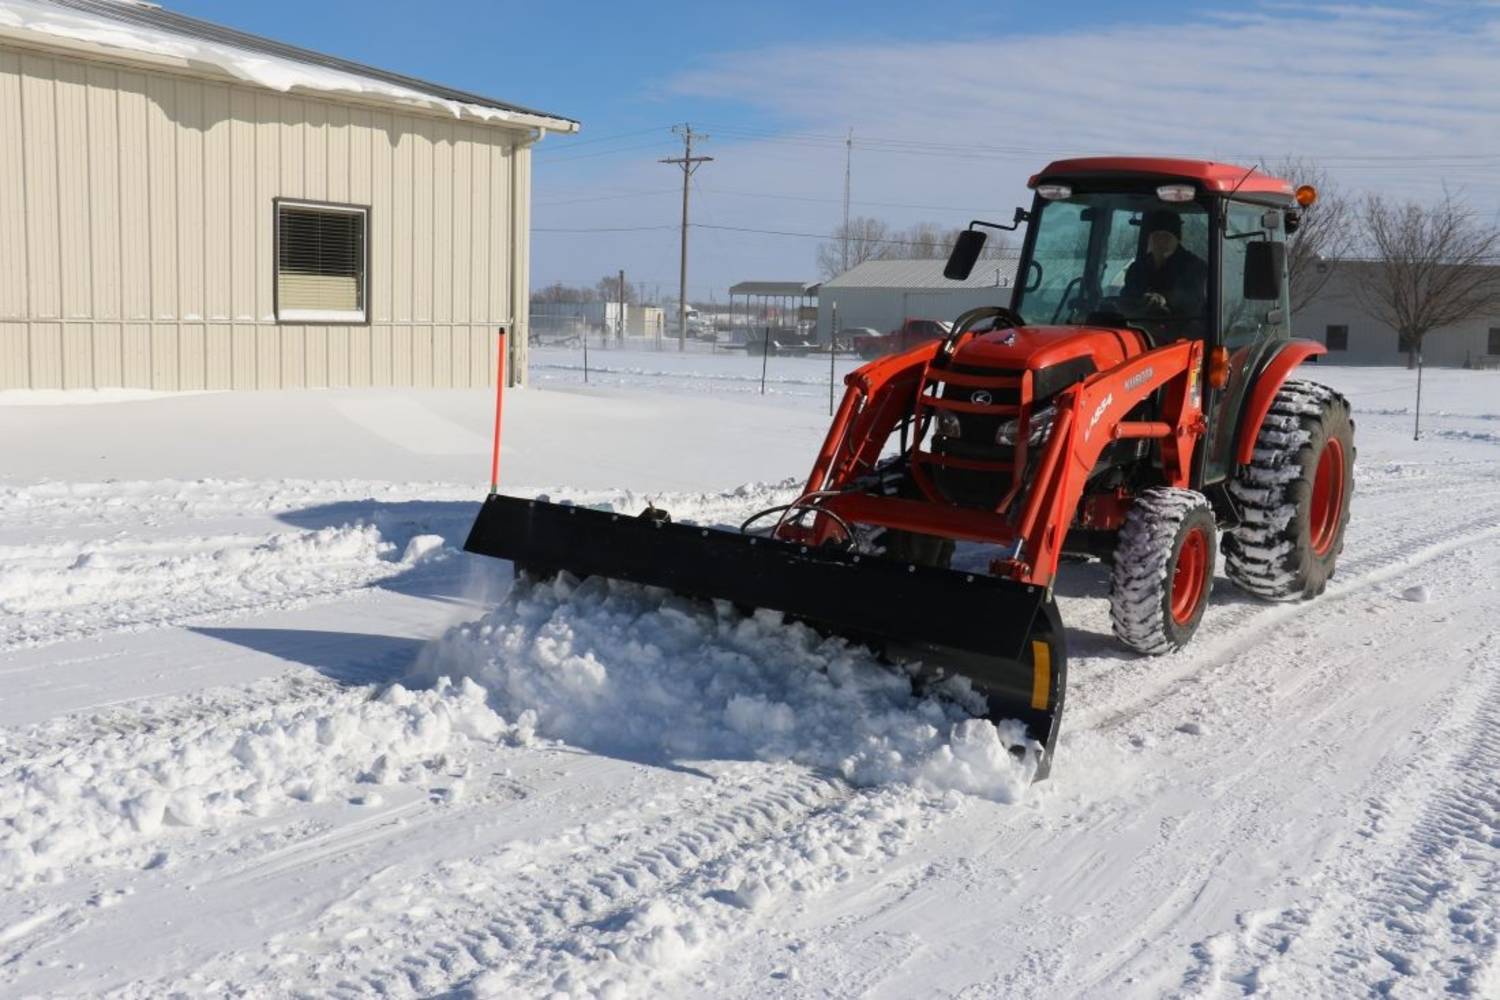 Land Pride Snow Removal Tools